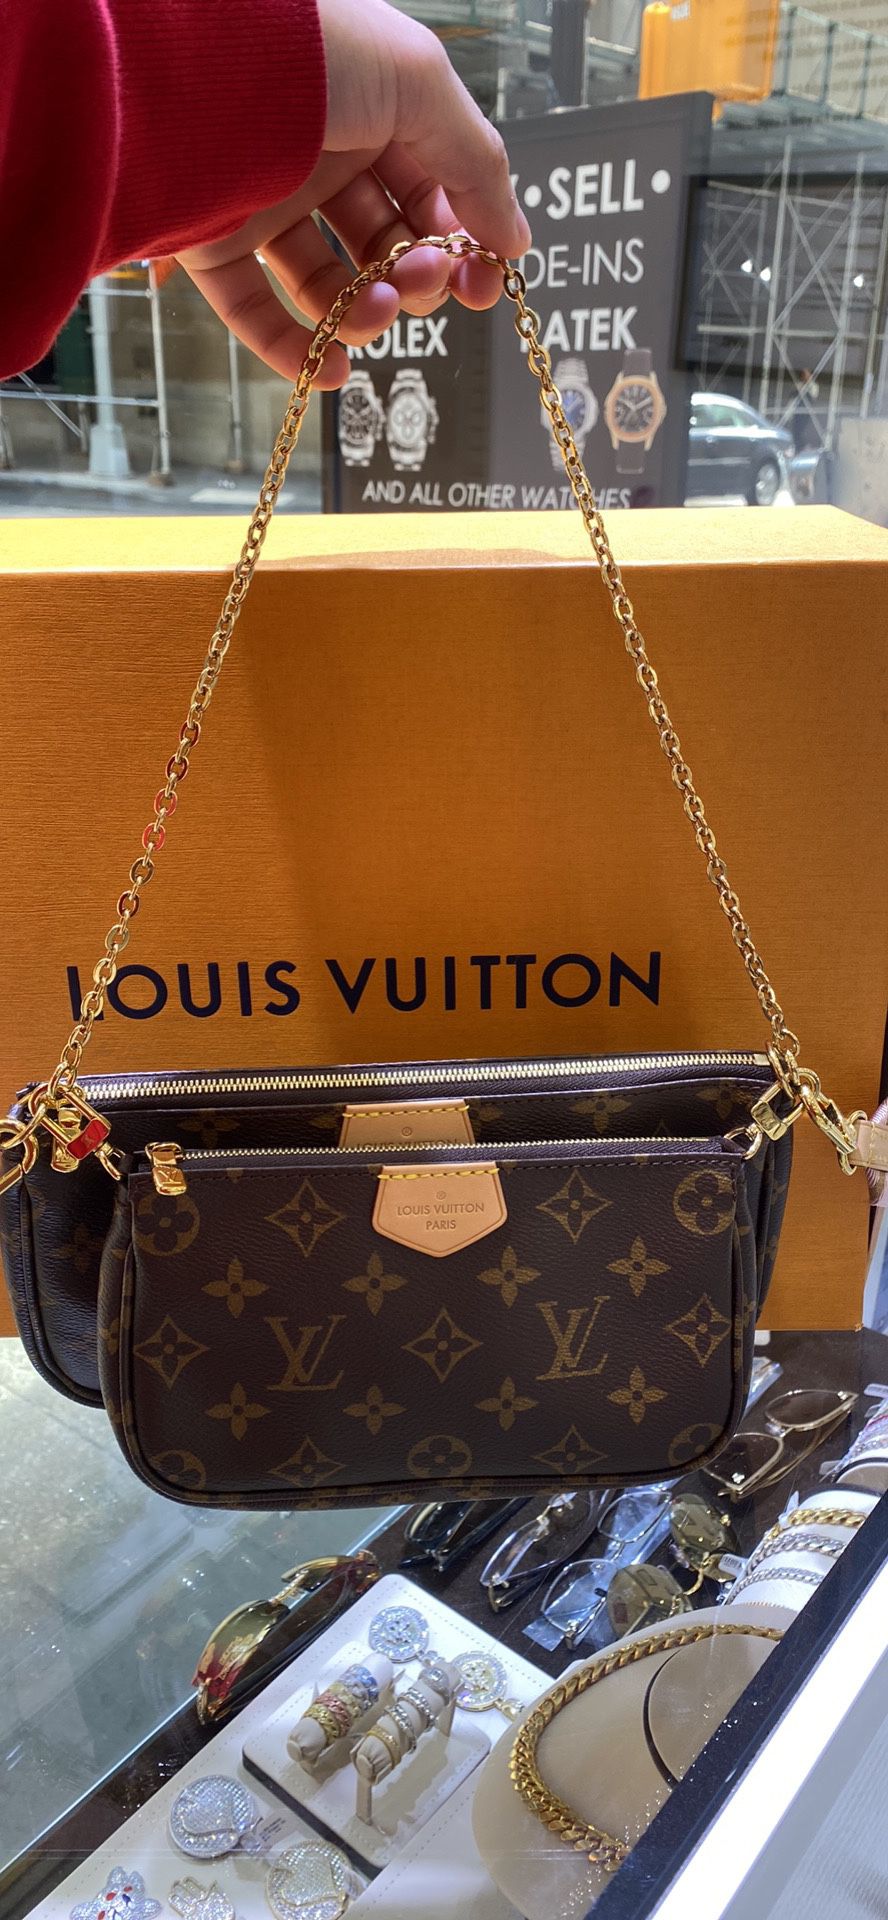 Louis Vuitton Cross Body Bag for Sale in Flat Rock, NC - OfferUp